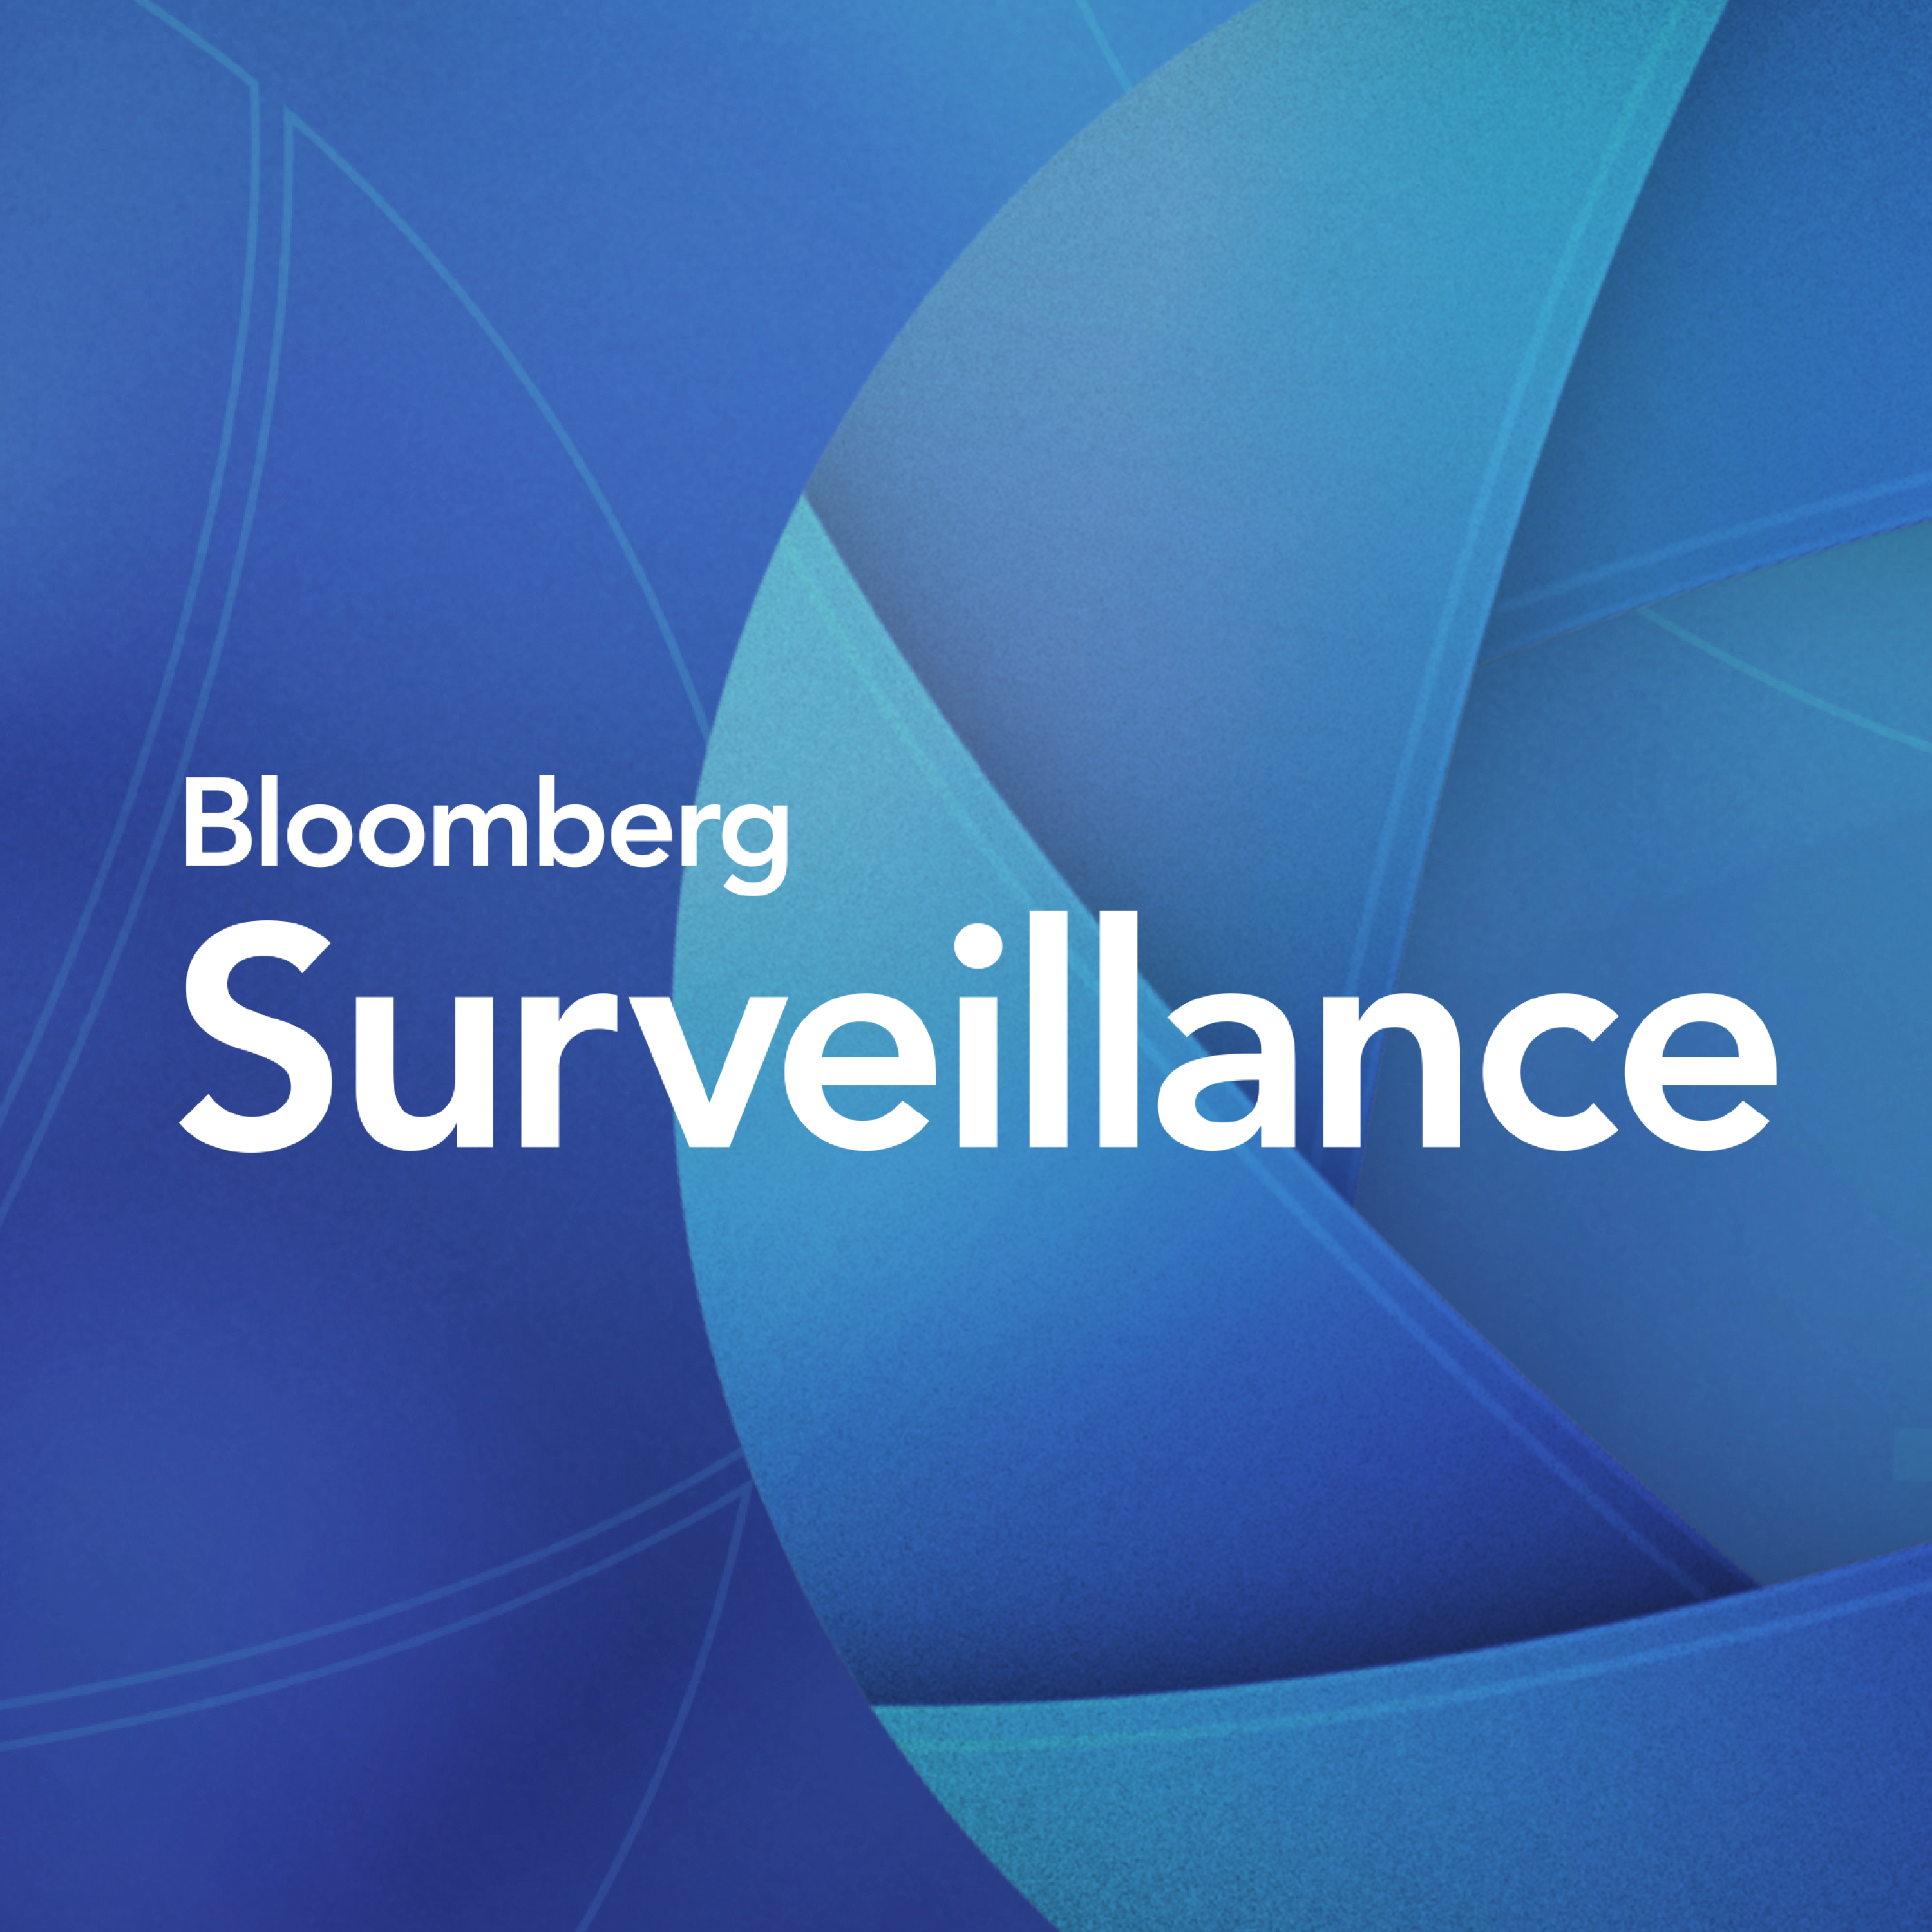 Surveillance: S&P Not In Bubble, Patterson Says